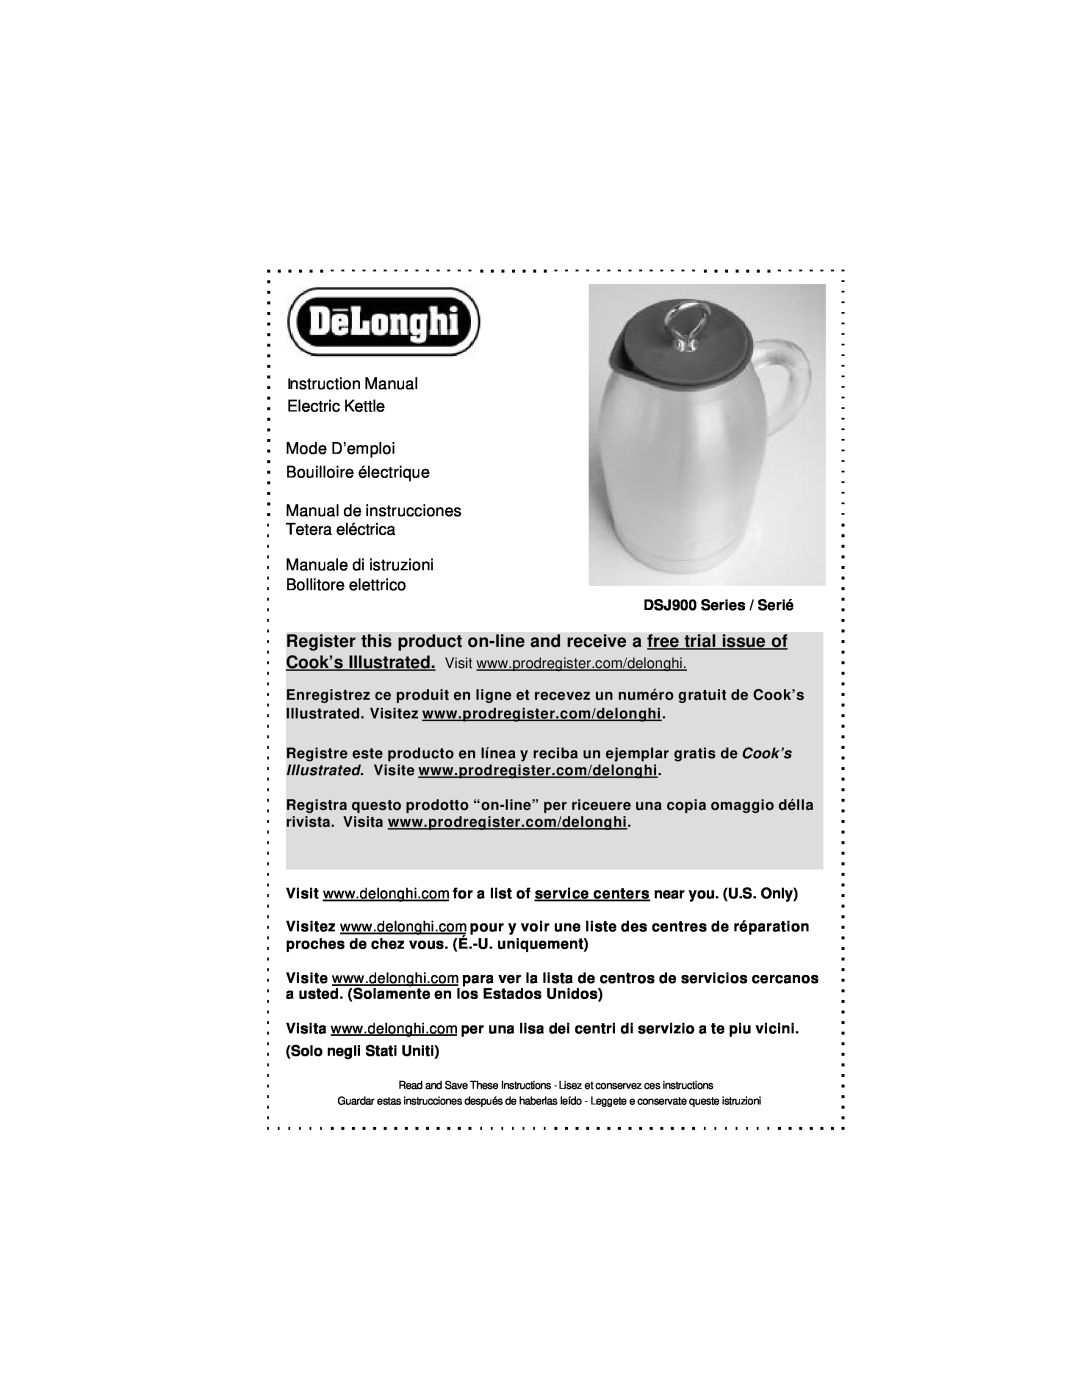 DeLonghi instruction manual Bouilloire électrique Manual de instrucciones Tetera eléctrica, DSJ900 Series / Serié 